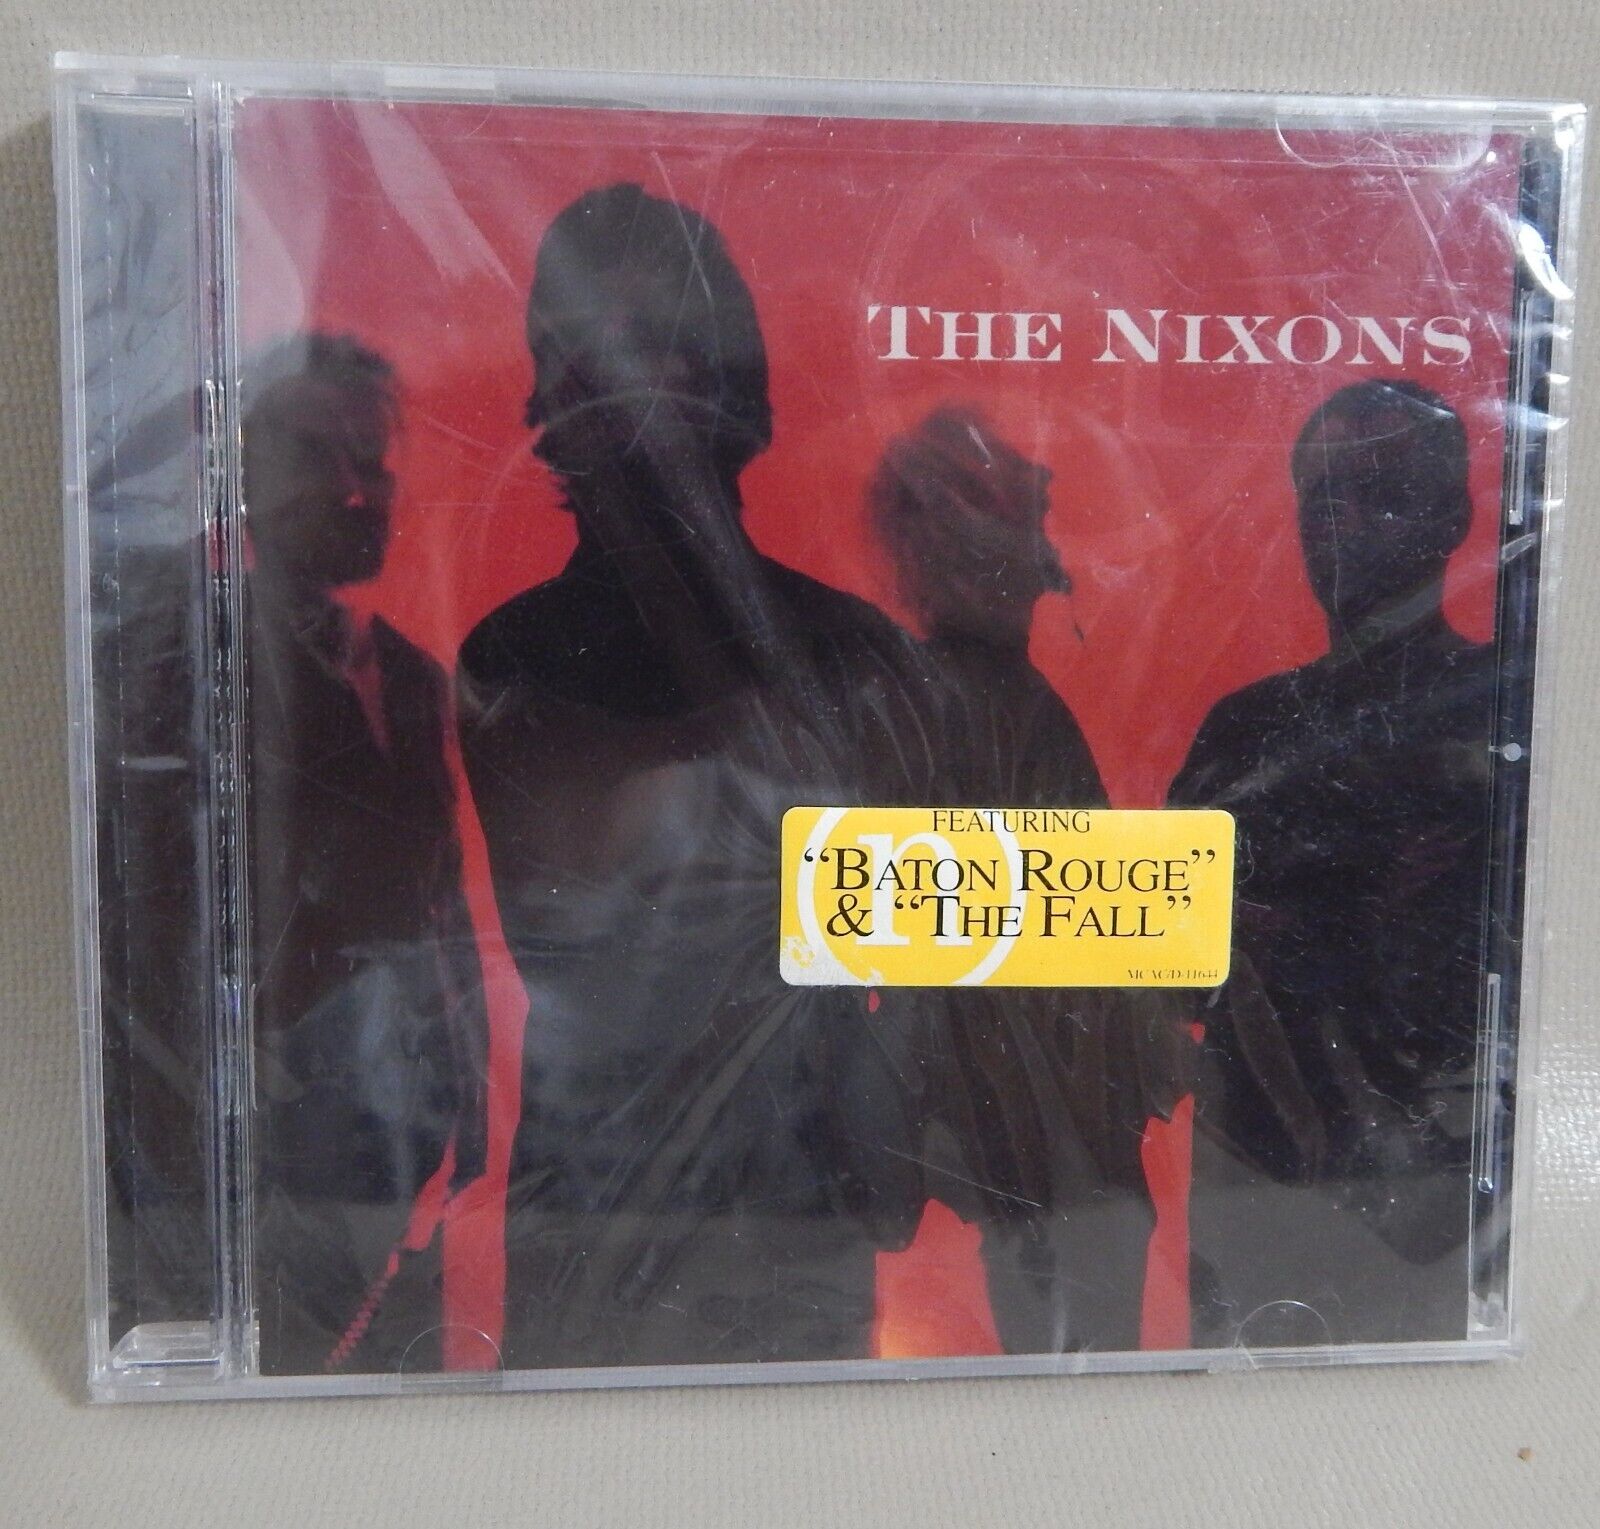 THE NIXONS - THE NIXONS (CD, 1997, MCA RECORDS) BMG New Sealed - READ & See Pics